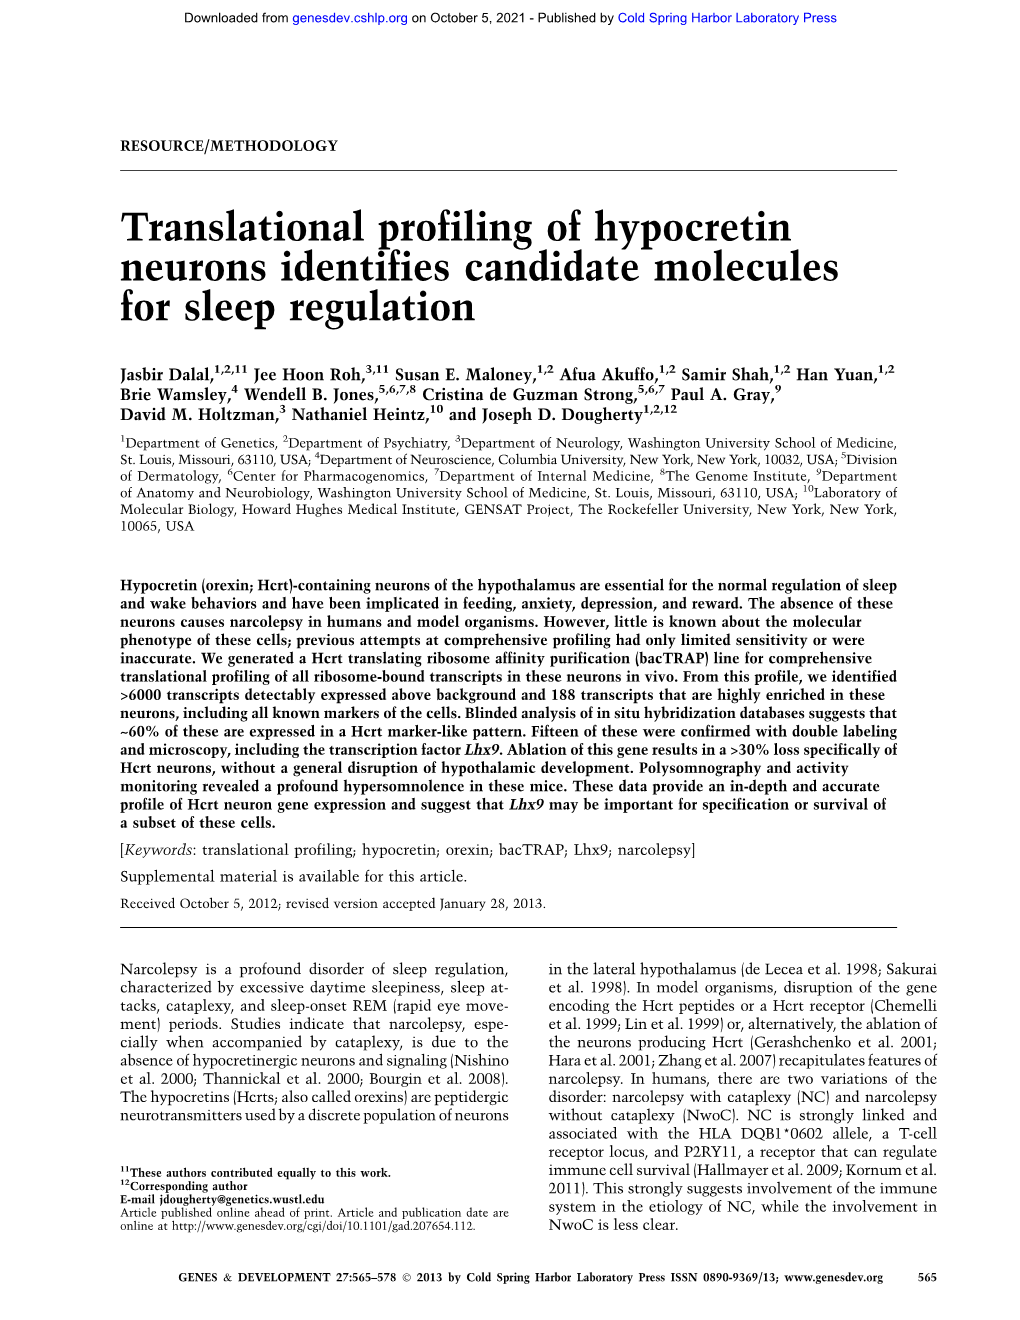 Translational Profiling of Hypocretin Neurons Identifies Candidate Molecules for Sleep Regulation